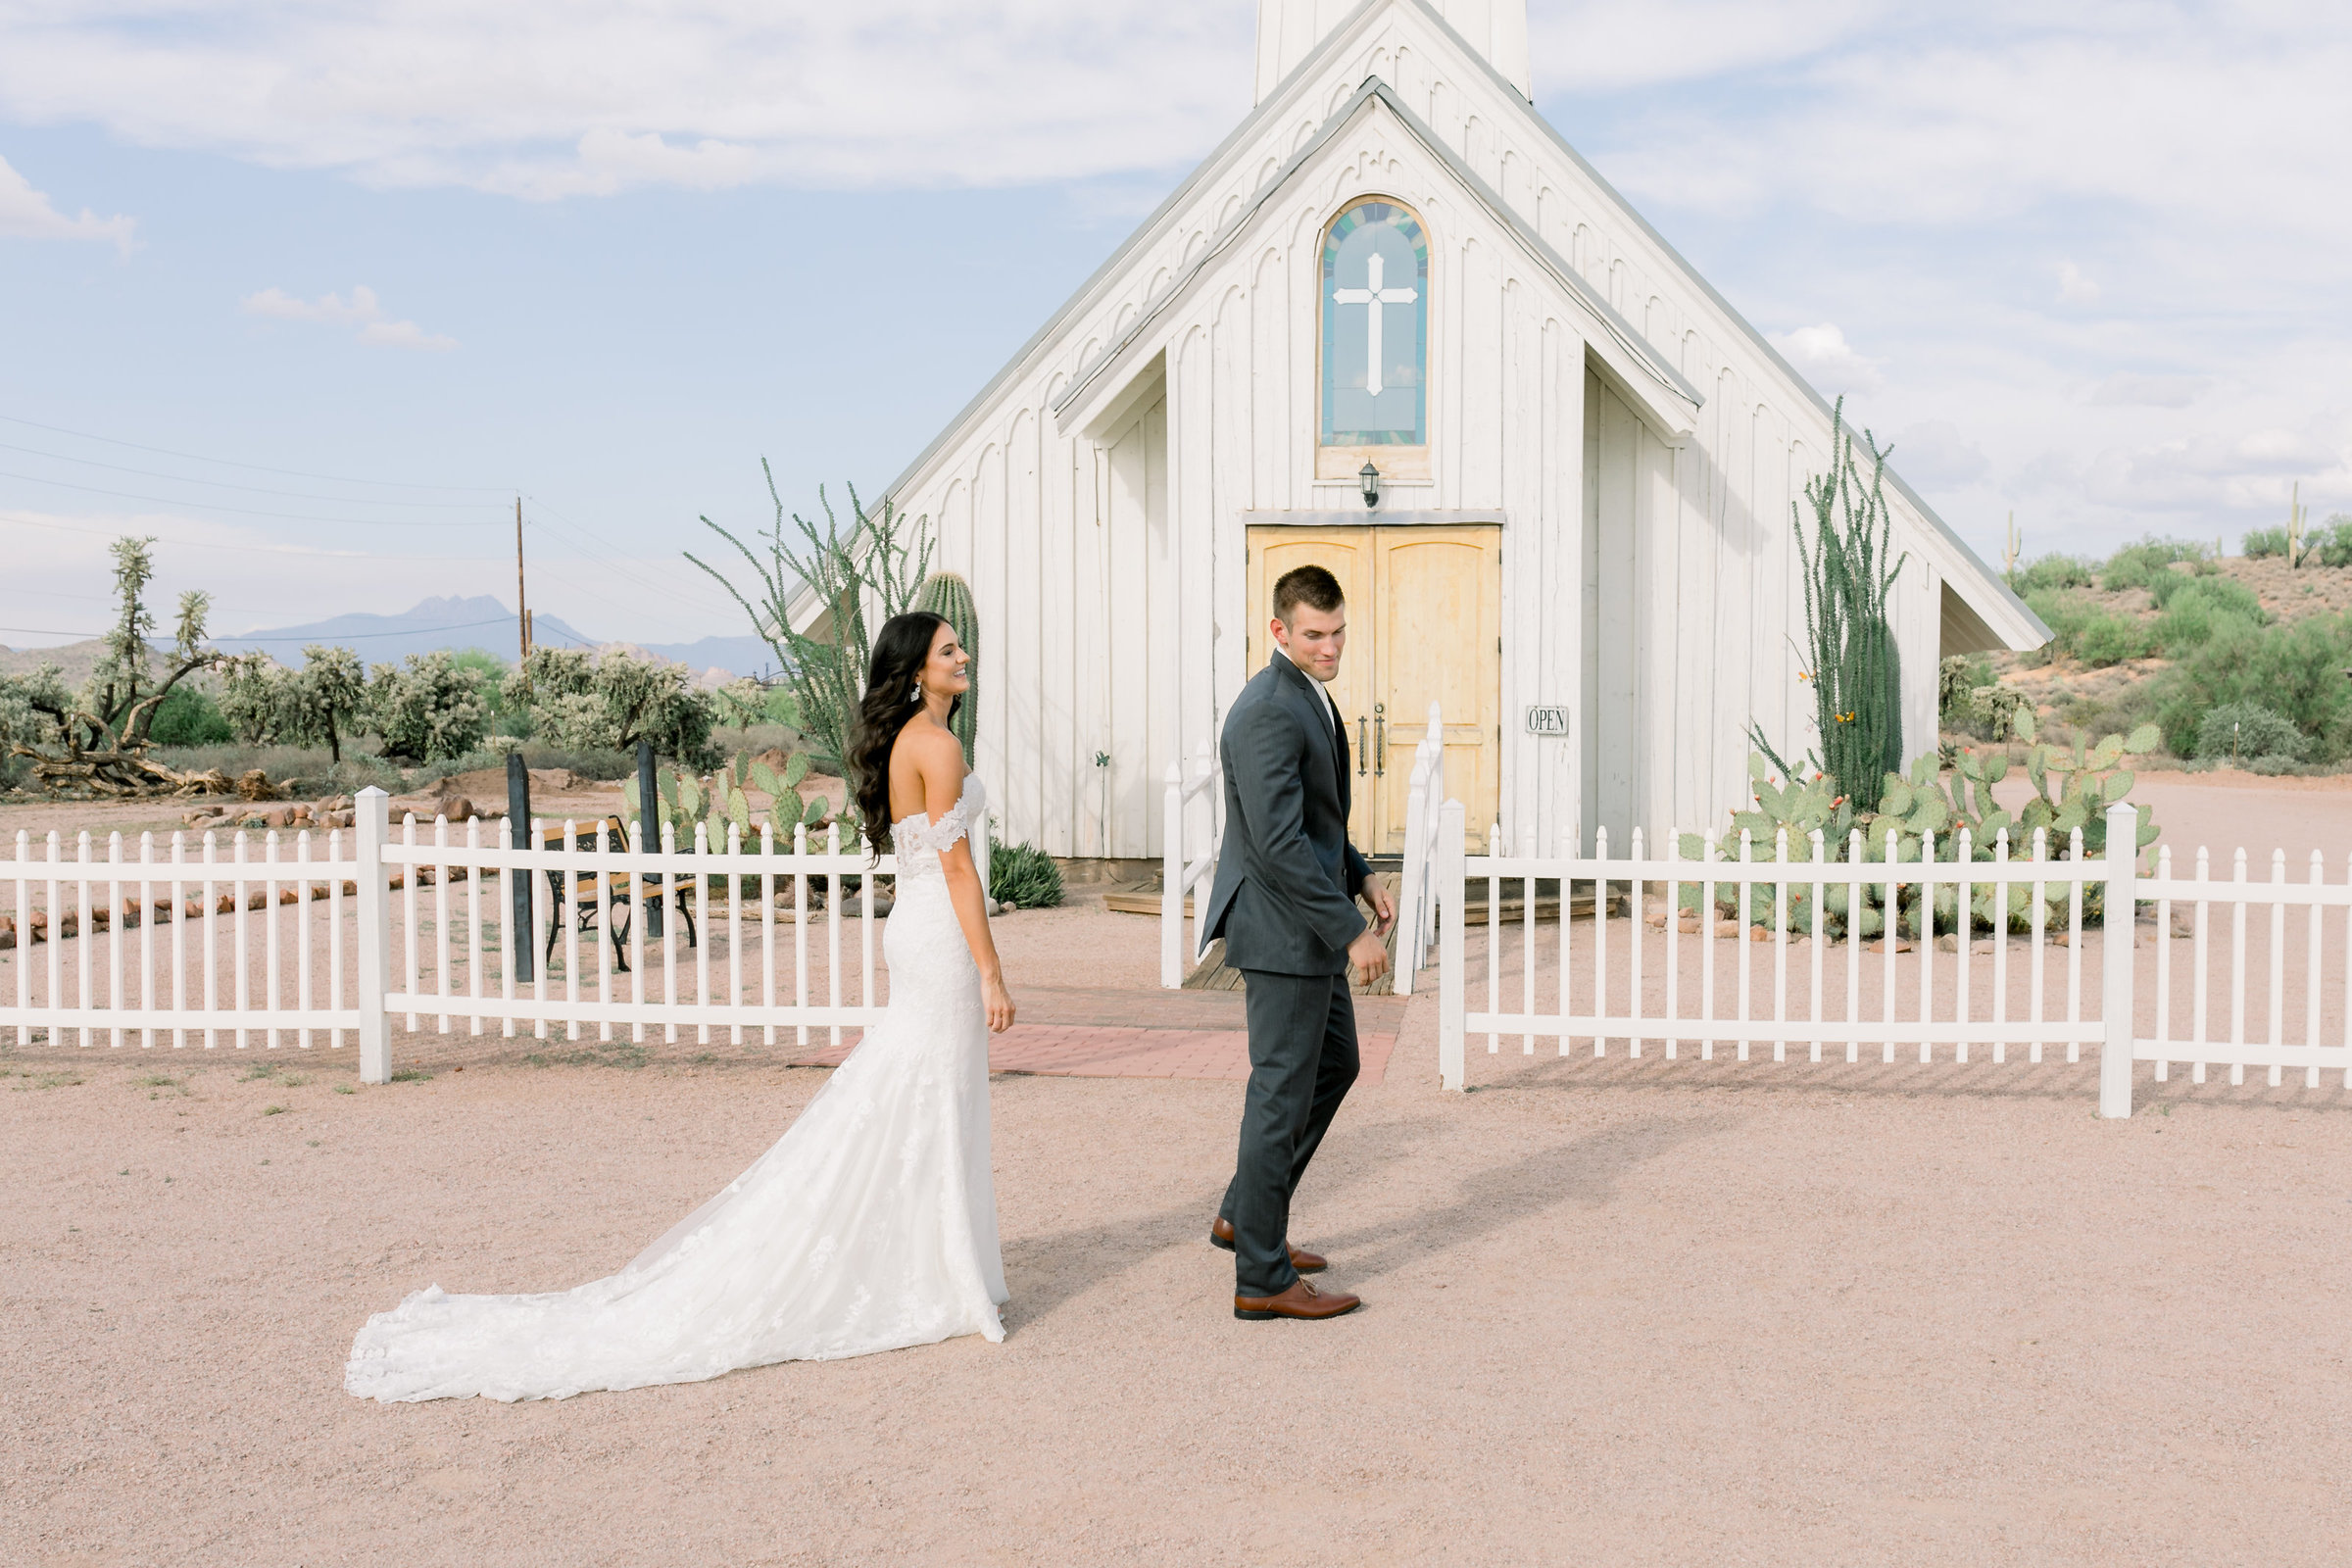 Karlie Colleen Photography - Arizona Wedding - The Paseo Venue - Jackie & Ryan -77